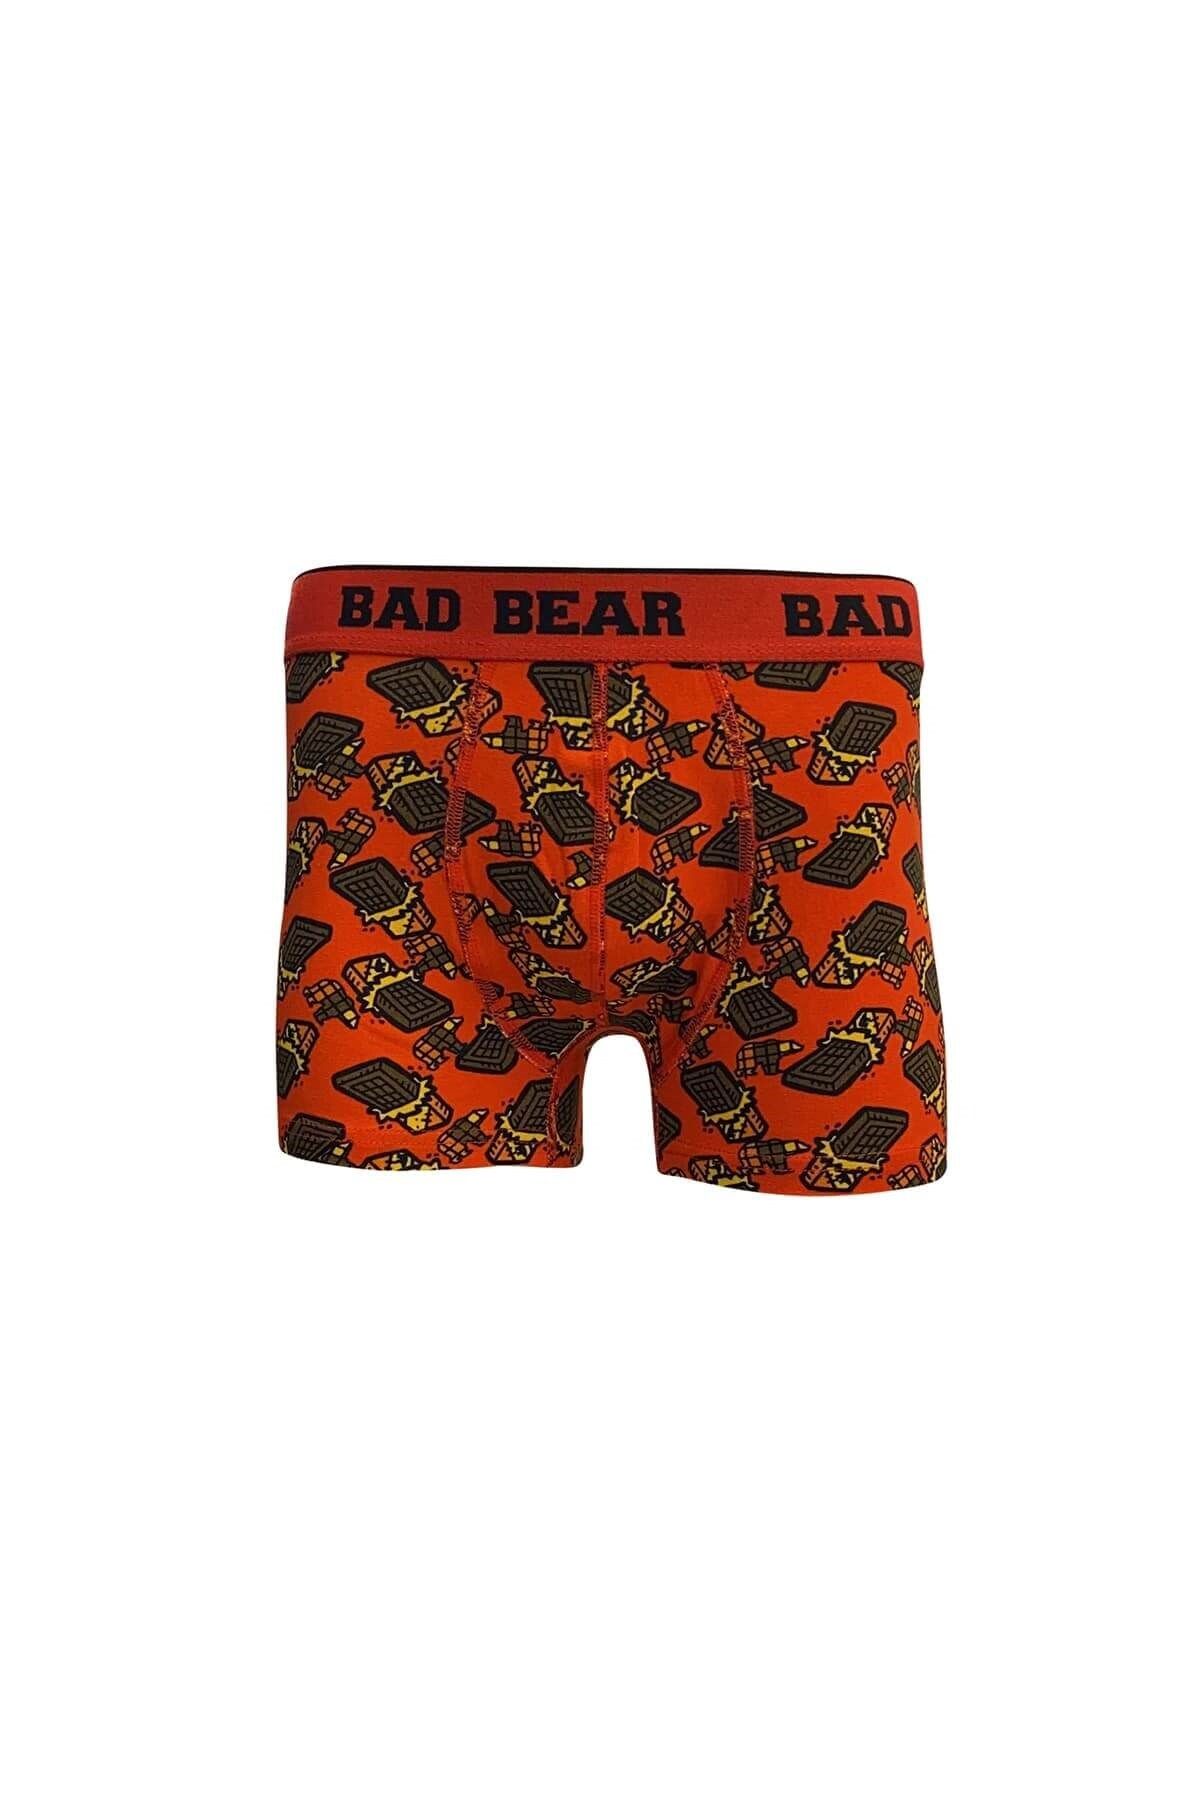 Bad Bear 21.01.03.004-c54 Chocolate Erkek Boxer